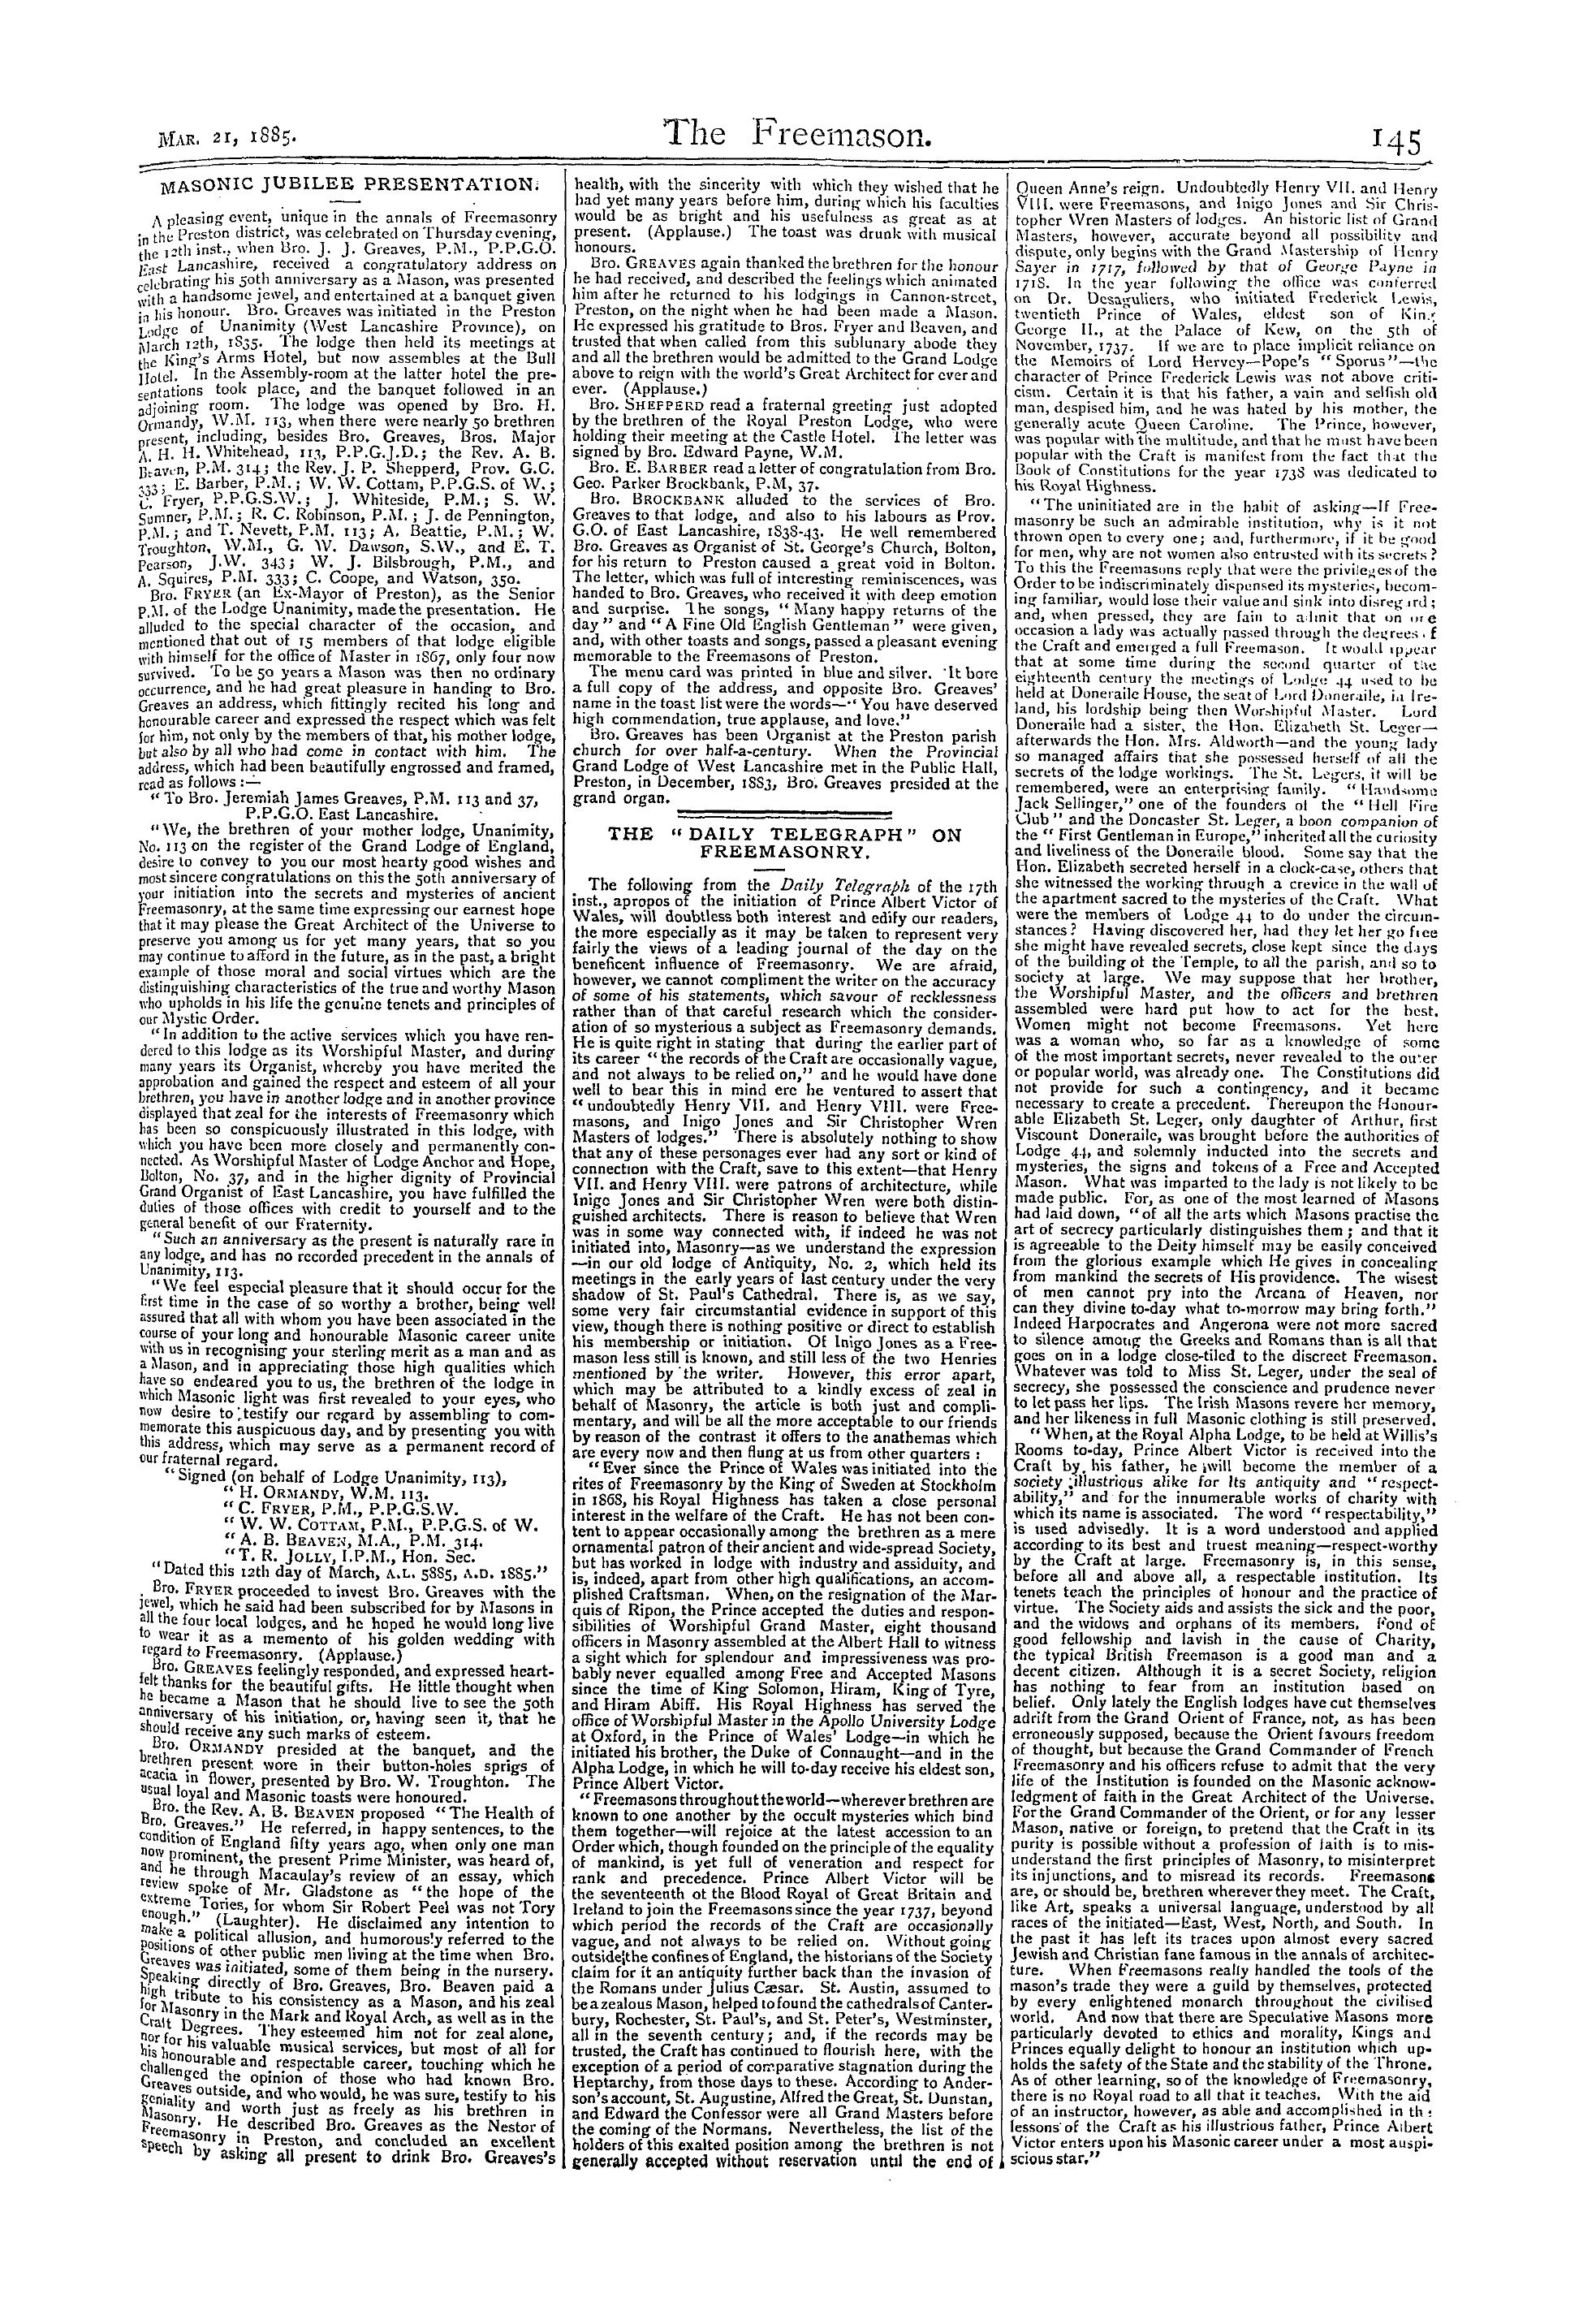 The Freemason: 1885-03-21 - The "Daily Telegraph" On Freemasonry.